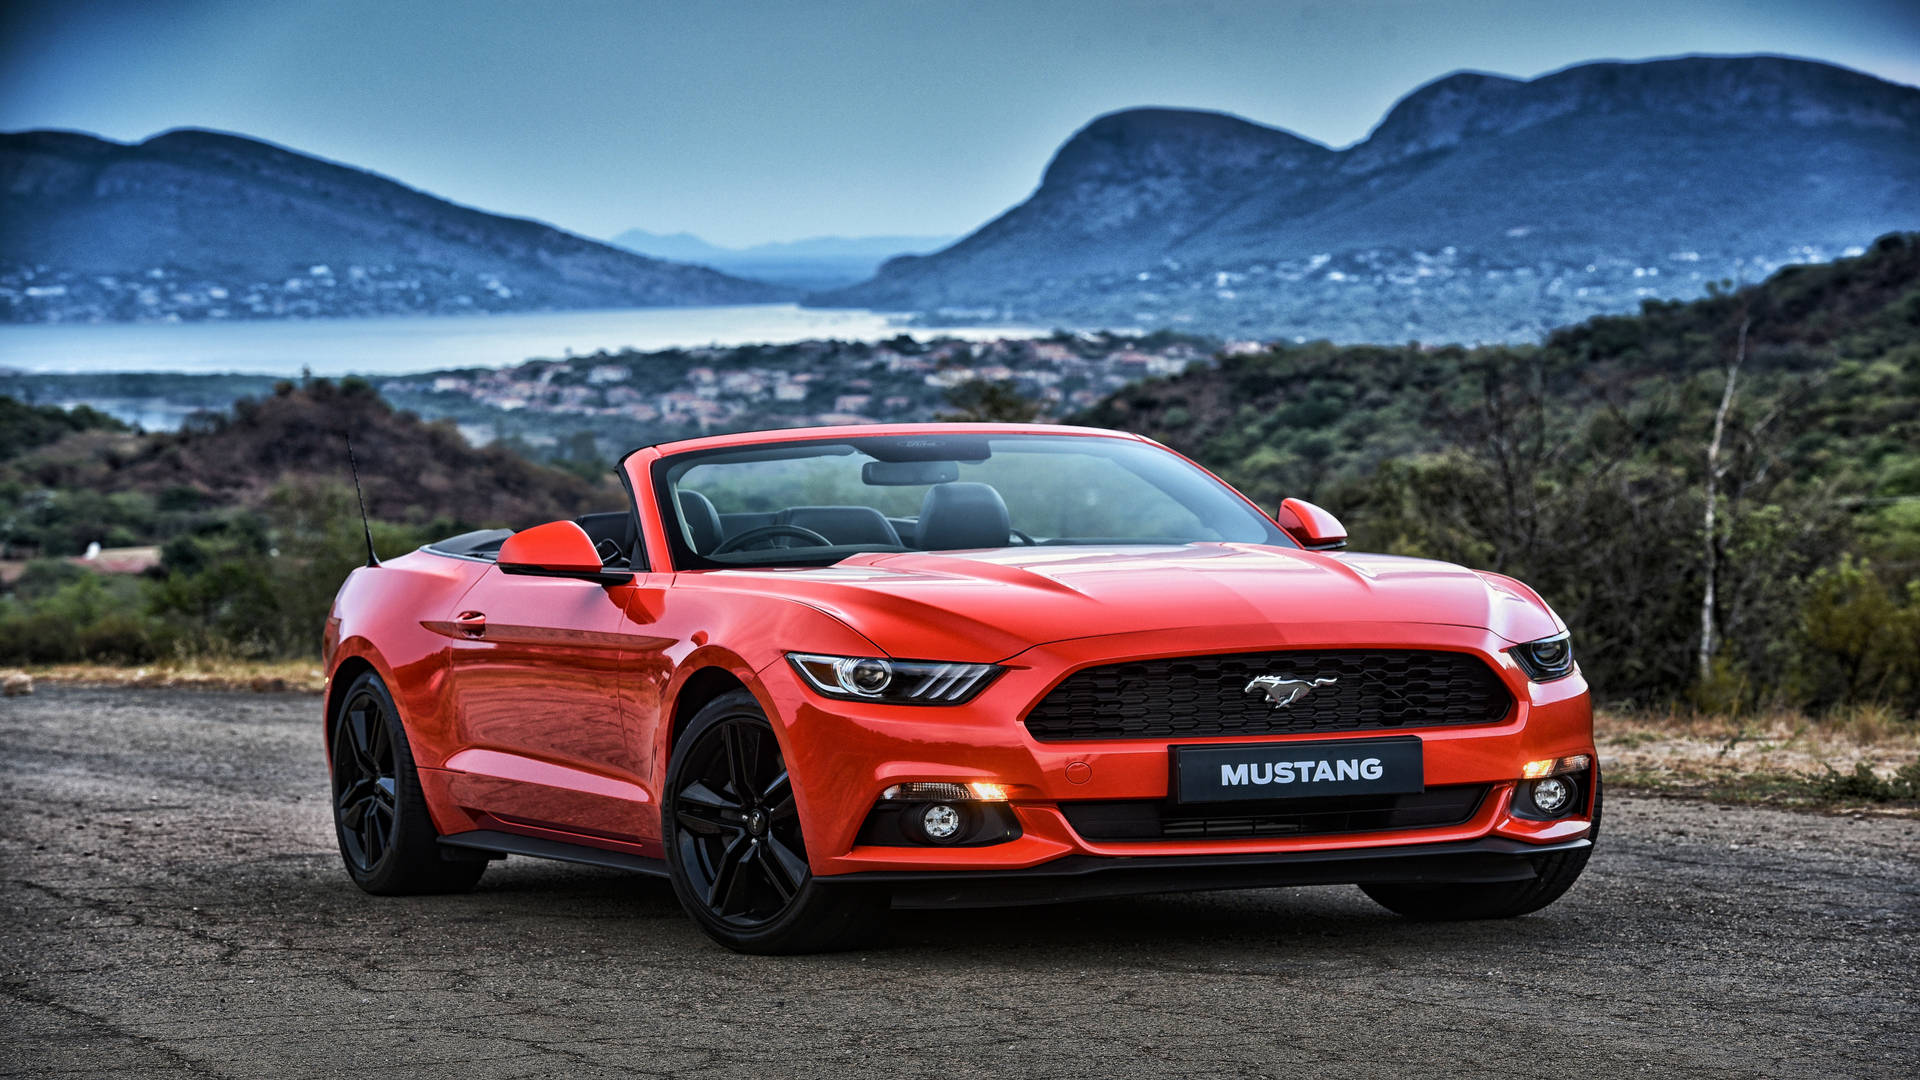 Breathtaking 4K Ultra HD Mustang Ford in Vibrant Orange Wallpaper